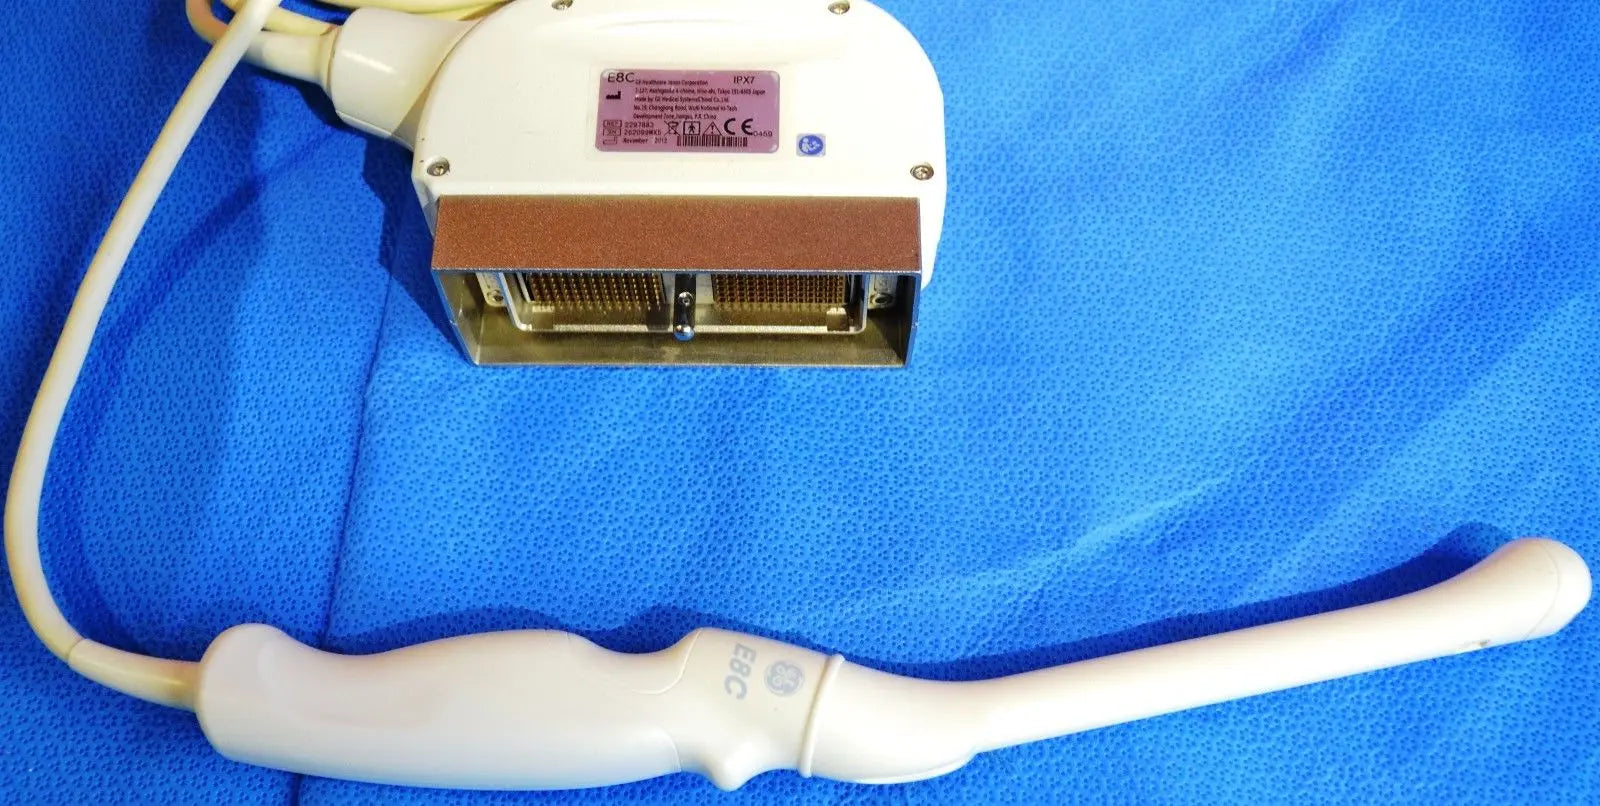 GE E8C Endocavity Ultrasound Transducer Gynecology Ultrasoun Transducer 2012 DIAGNOSTIC ULTRASOUND MACHINES FOR SALE